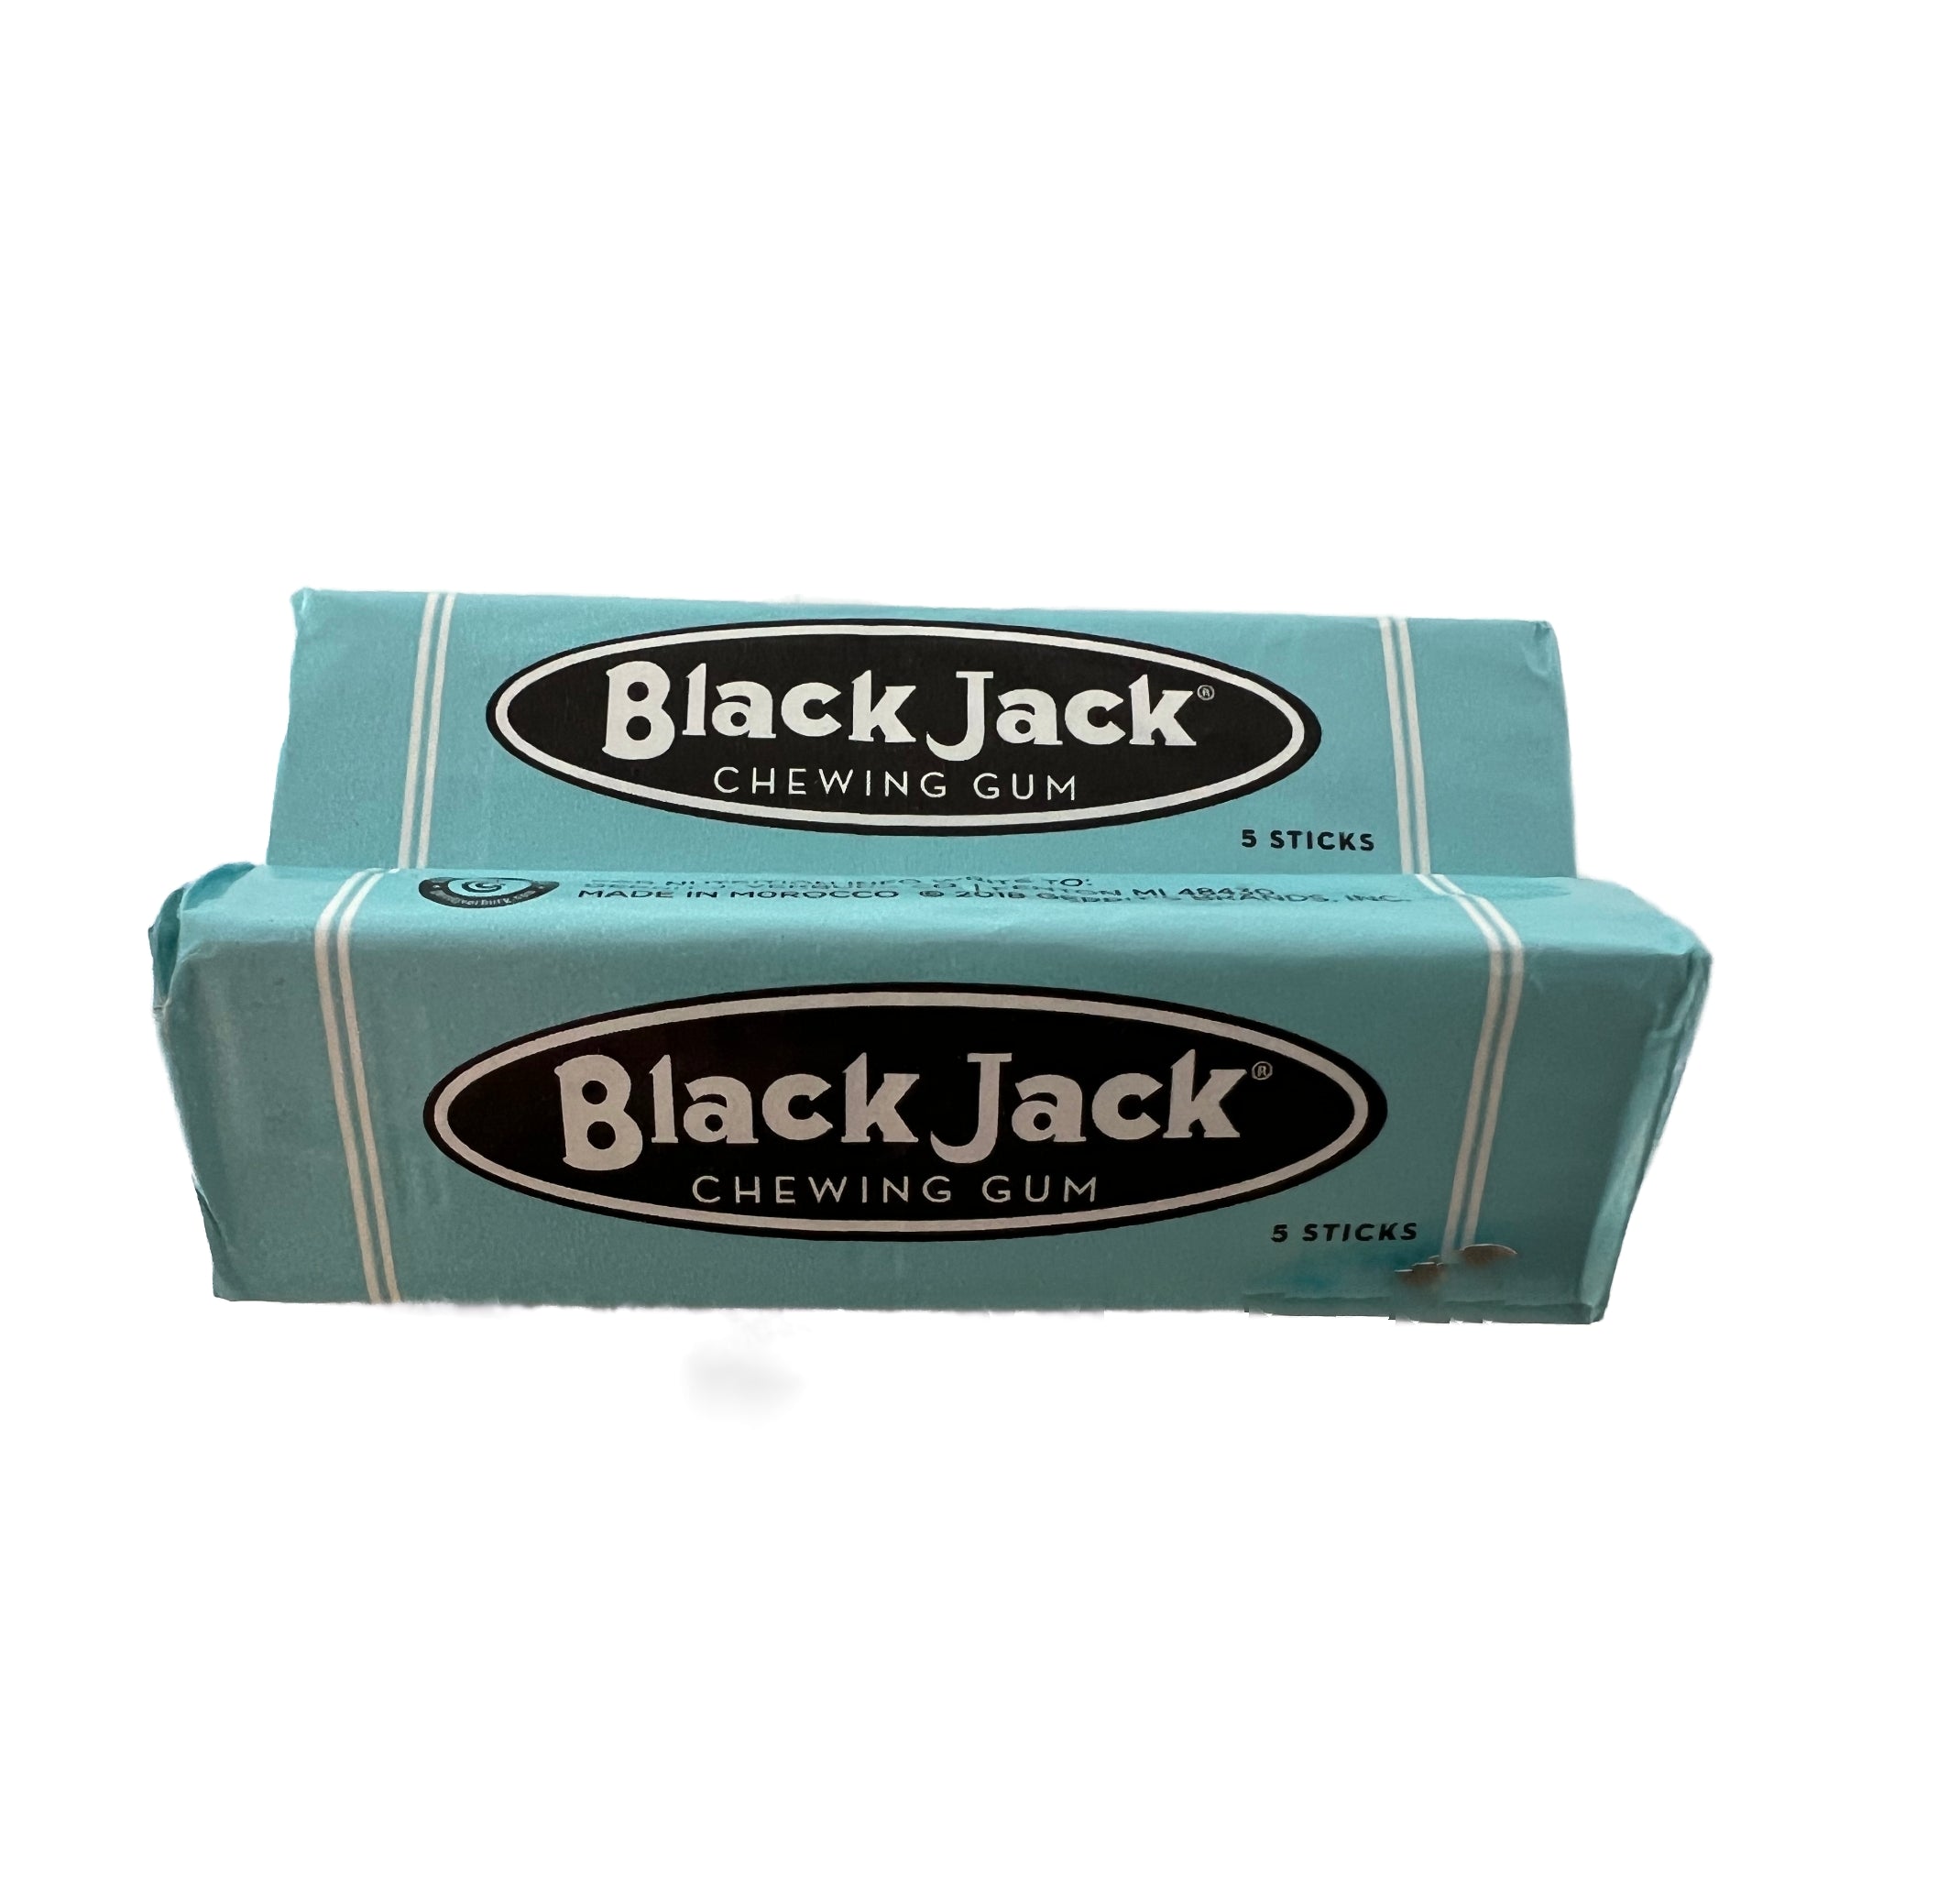 Light blue pack of stick chewing gum 5 sticks per pack Black Jack